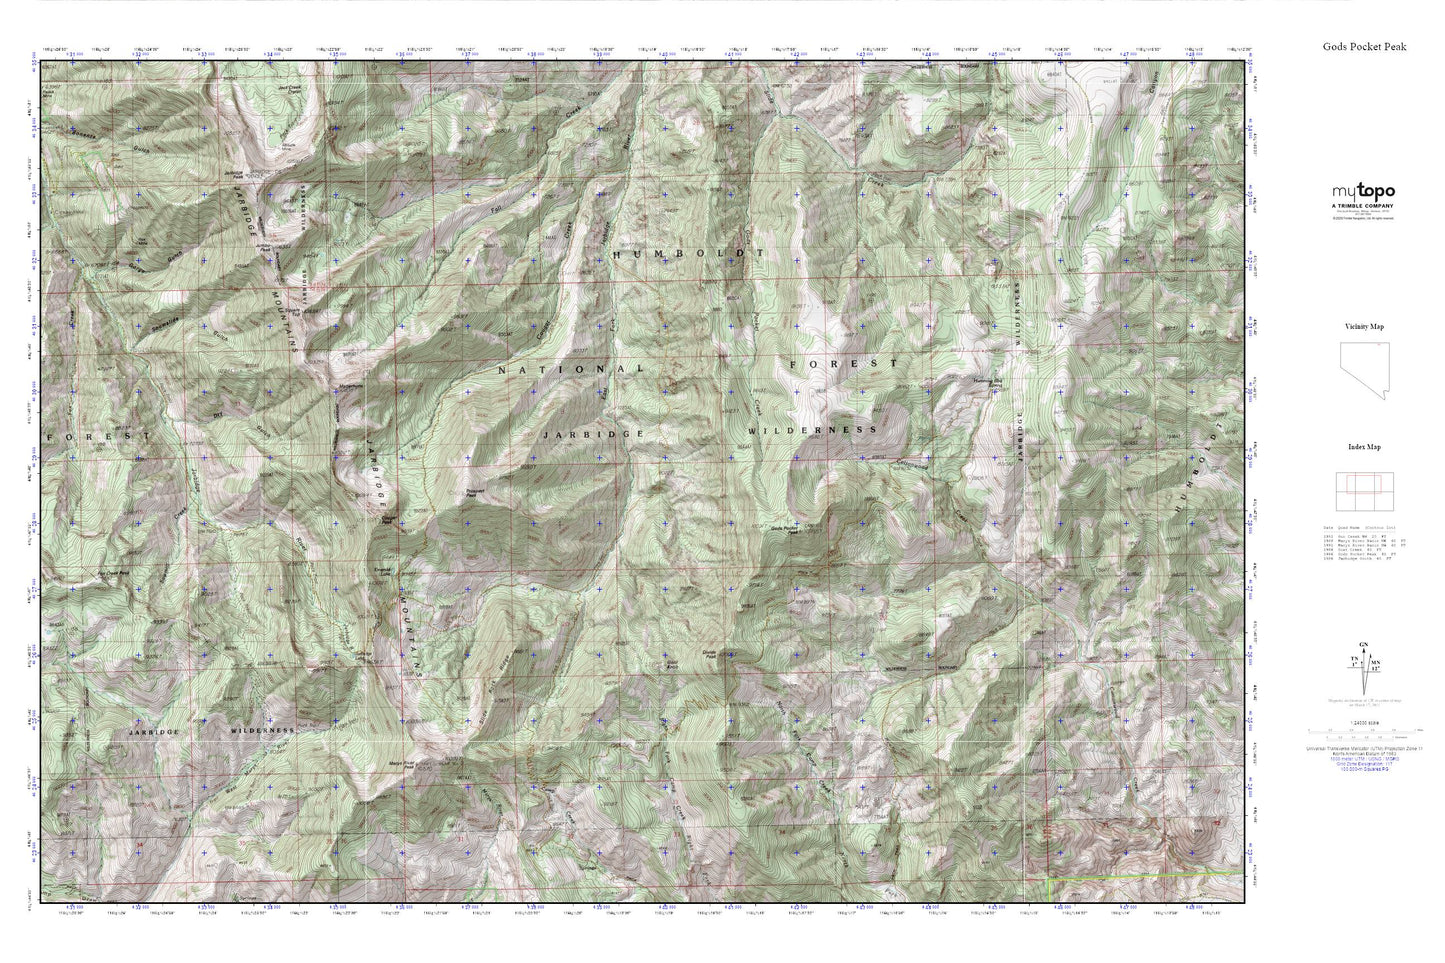 Gods Pocket Peak MyTopo Explorer Series Map Image